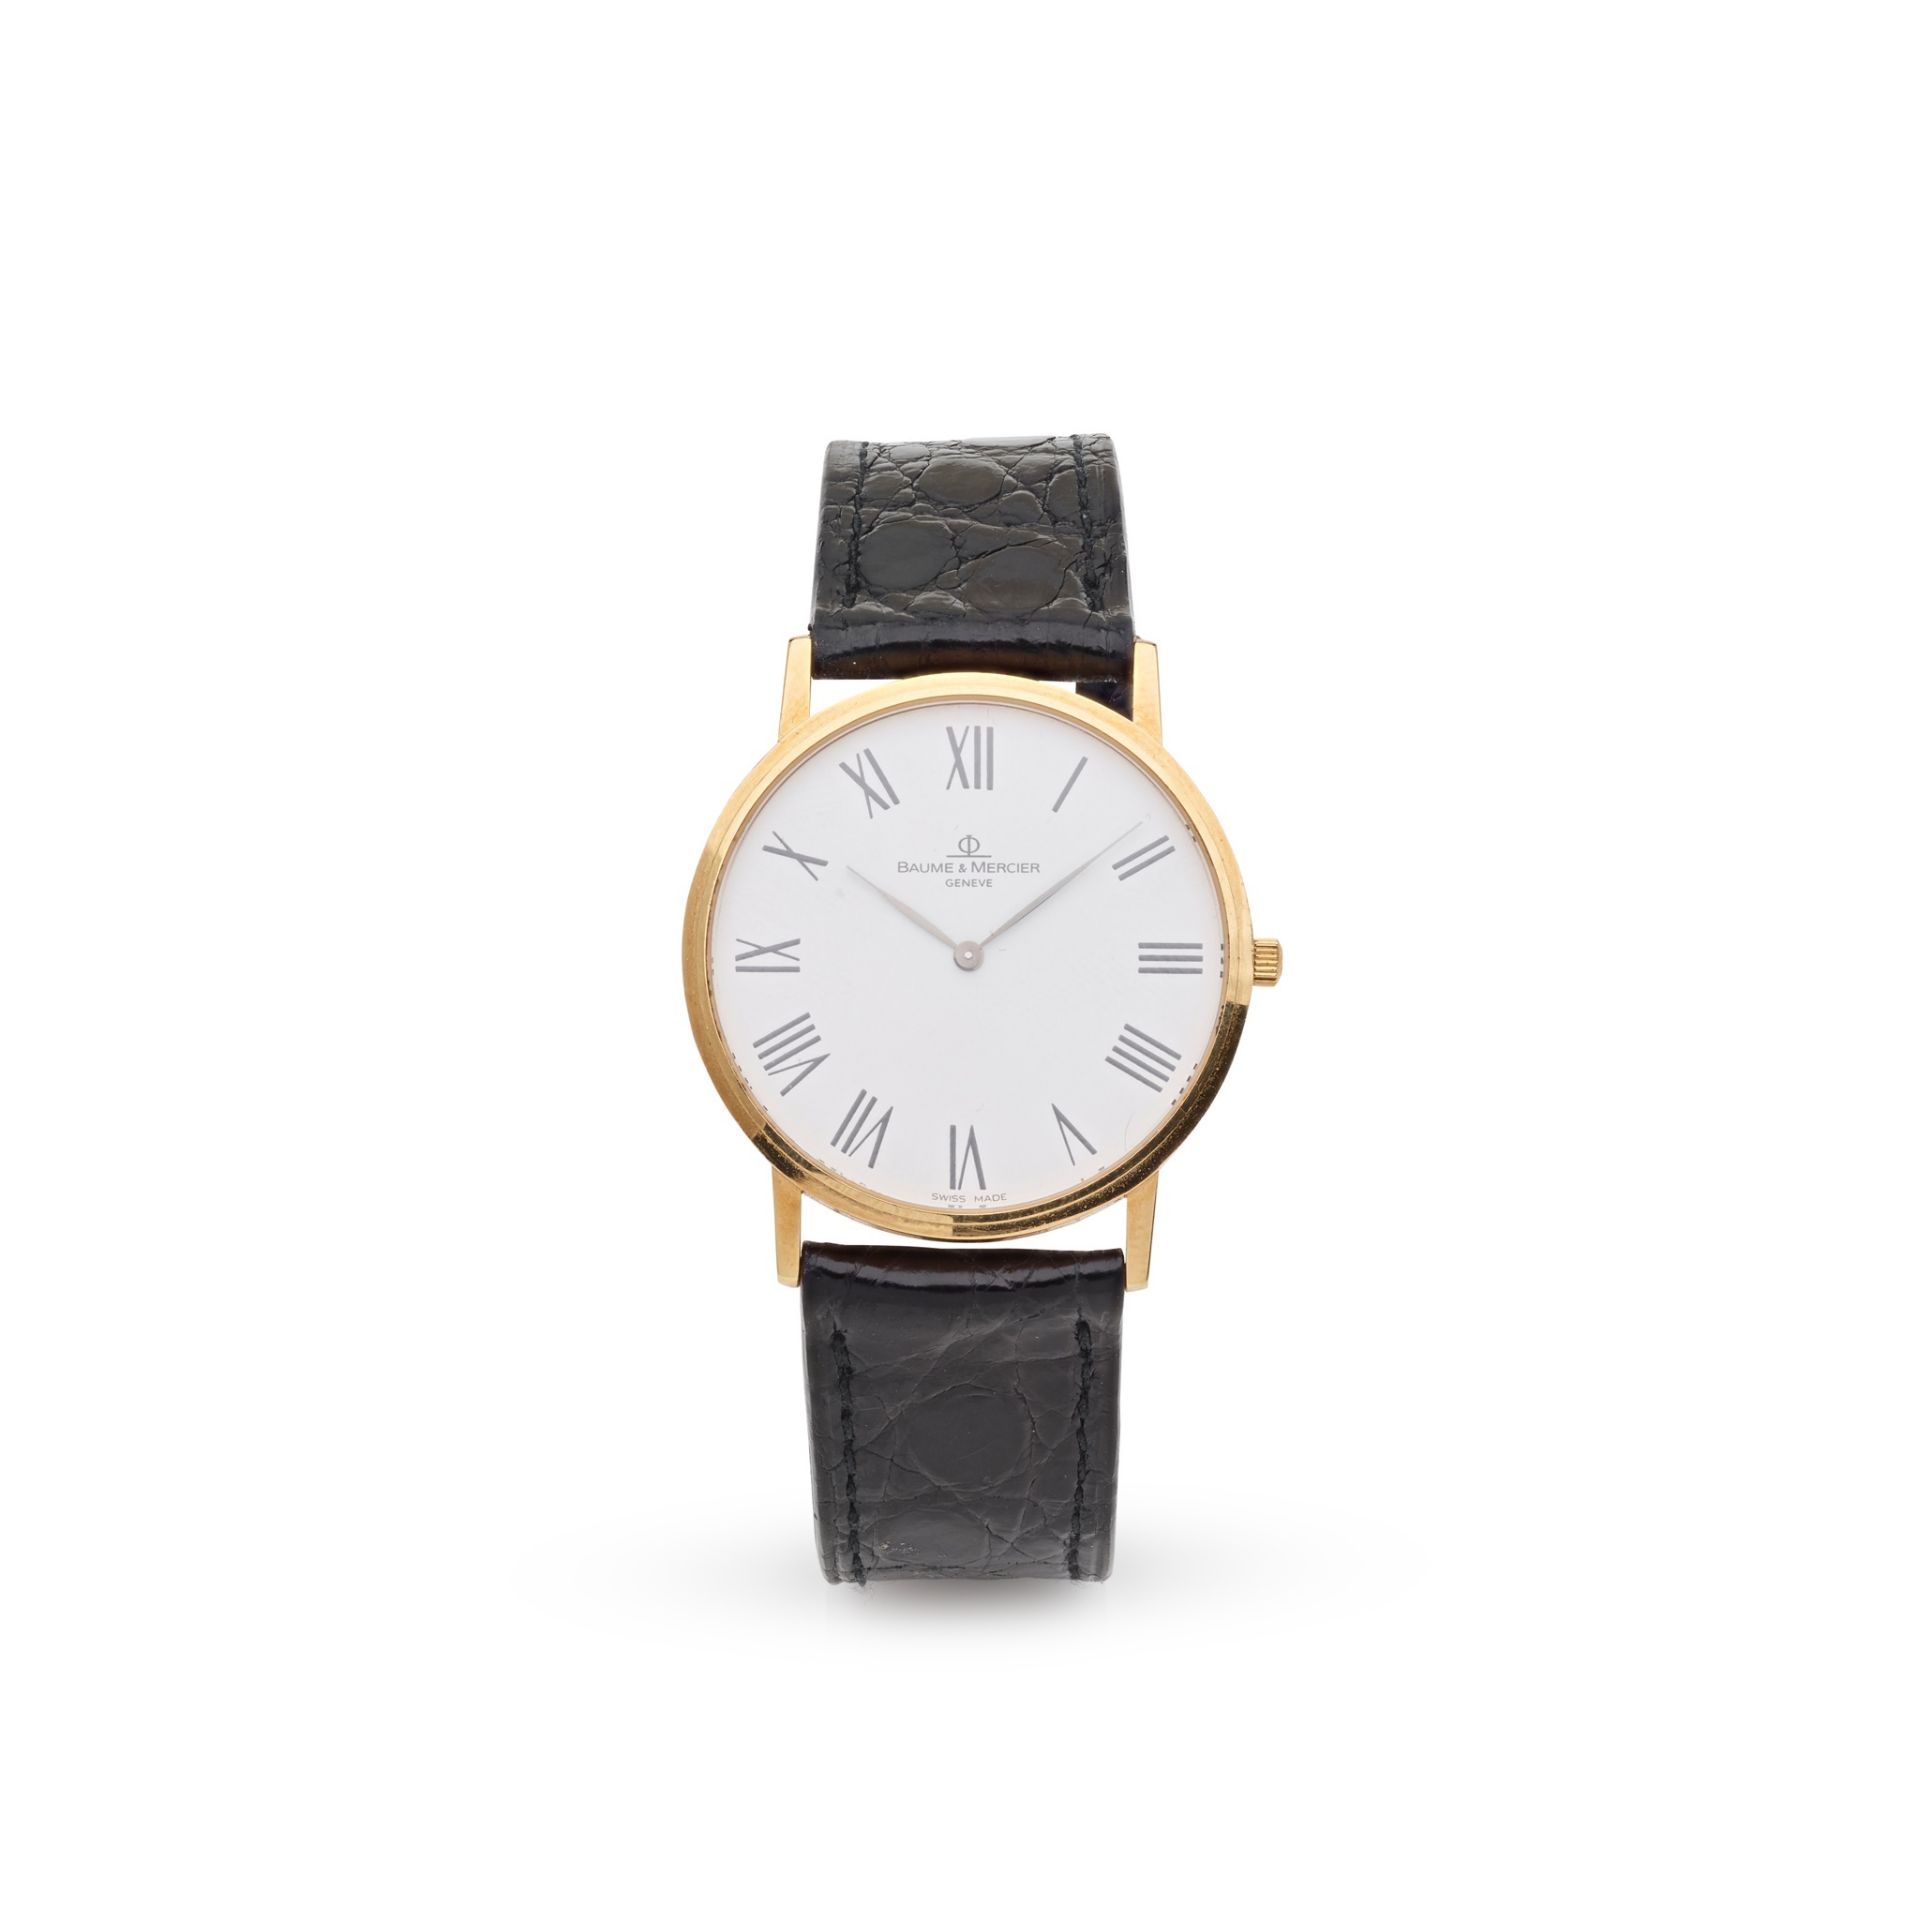 Baume and Mercier: a quartz wrist watch